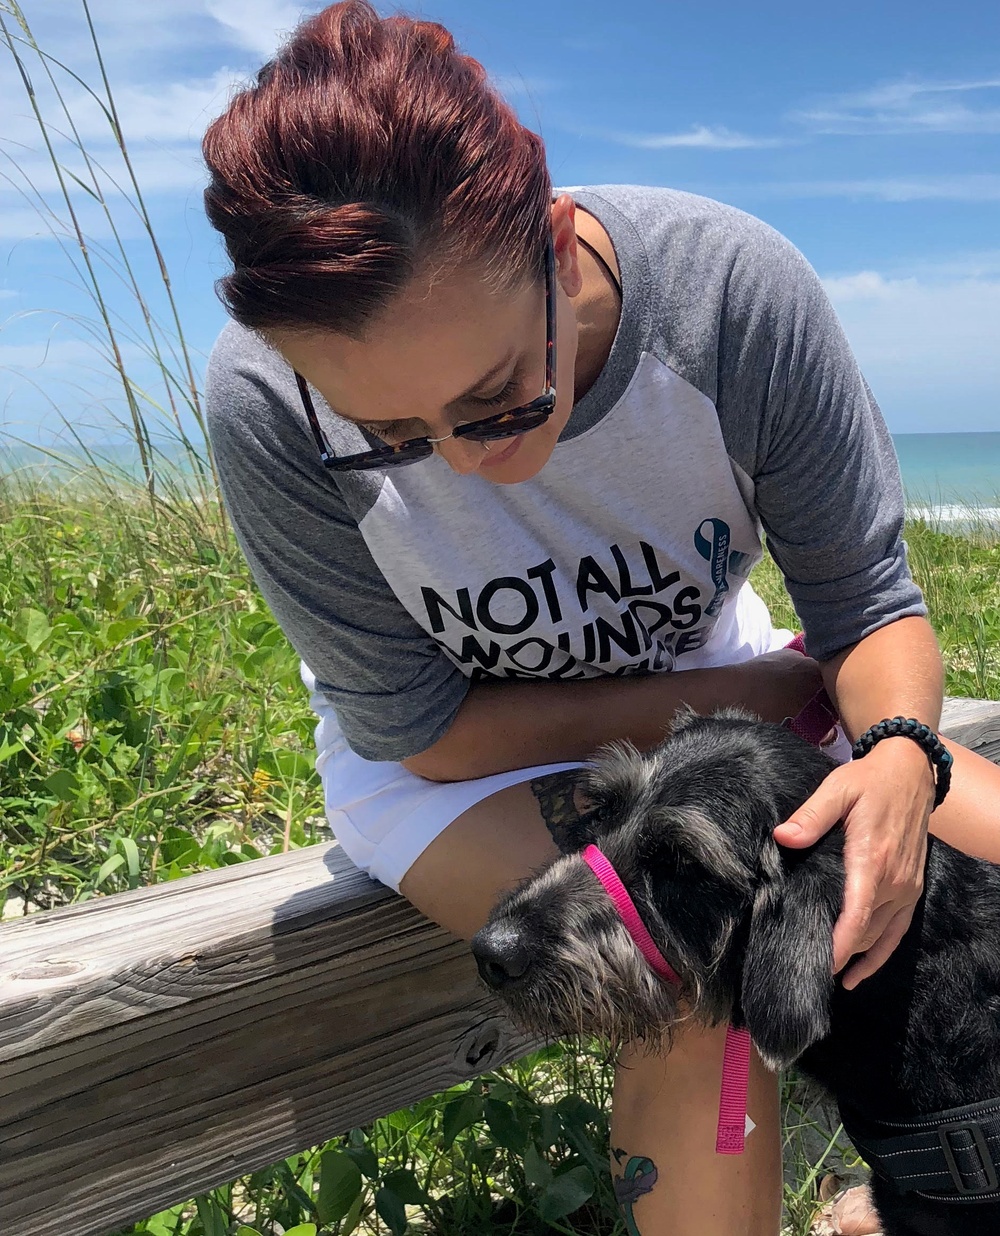 Widow holds walk-run on the beach to heal, bring awareness to PTSD, suicide